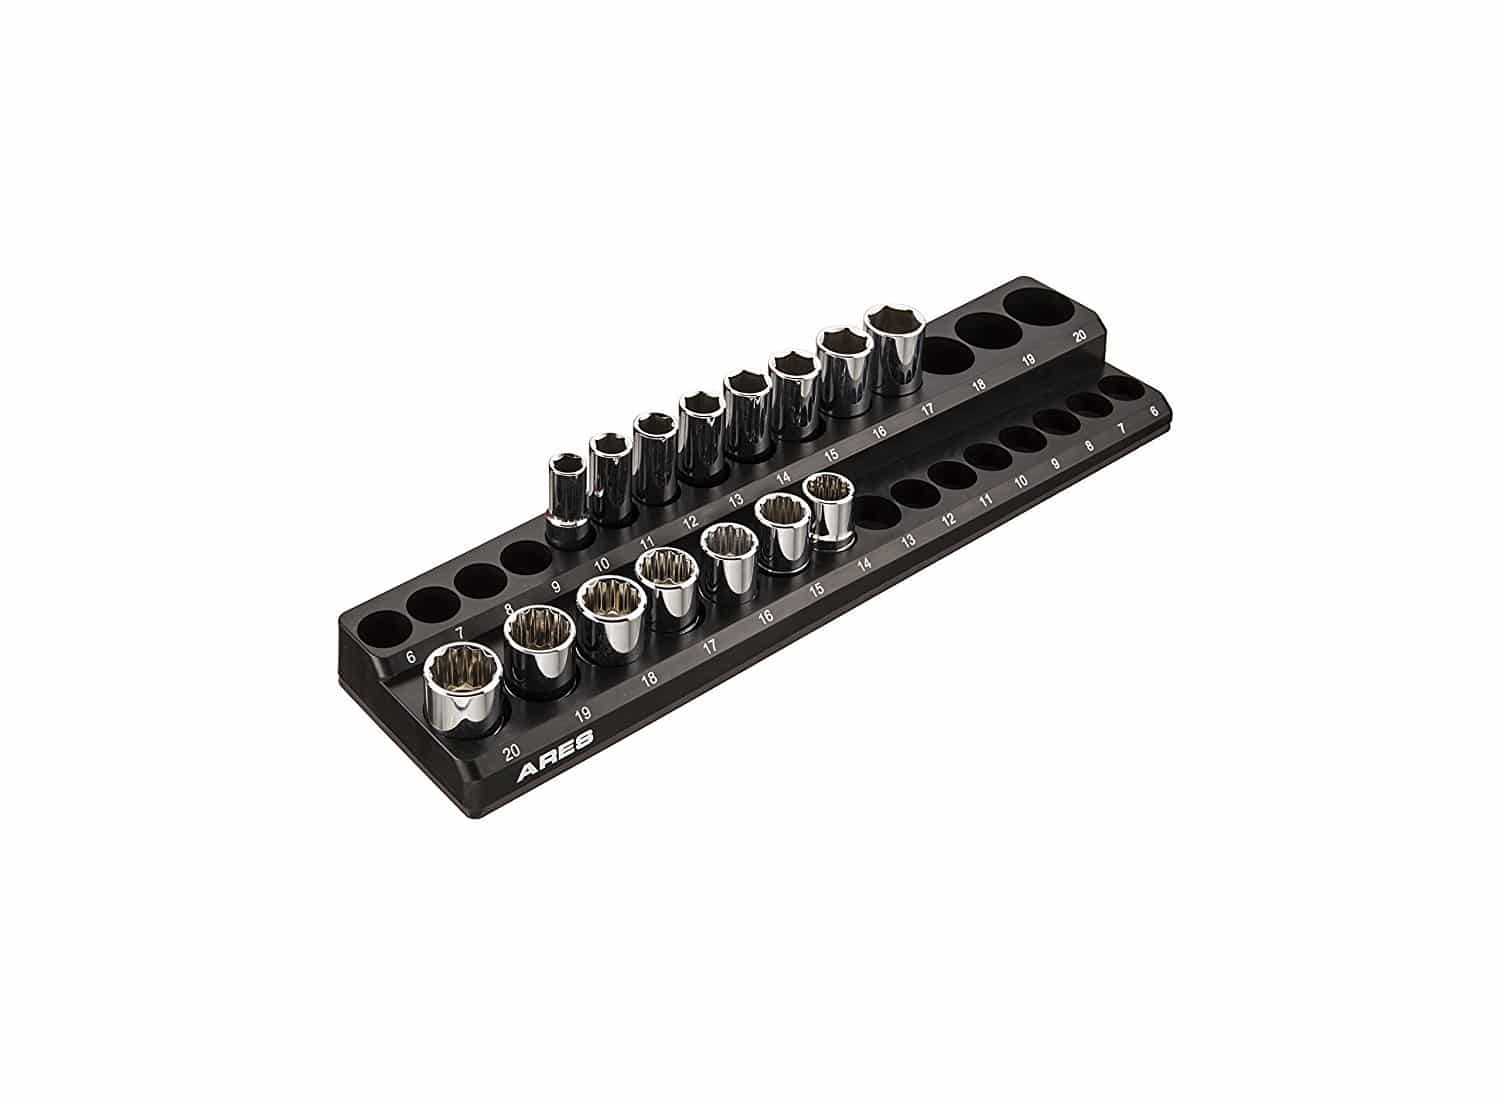 WXTOOLS 80-Pcs Iron Premium Quality Adjustable Socket Holders 1/2-Inch Portable Socket Organizer Tray 1/4-Inch 3/8-Inch Best Heavy Duty Socket Rail for Men 